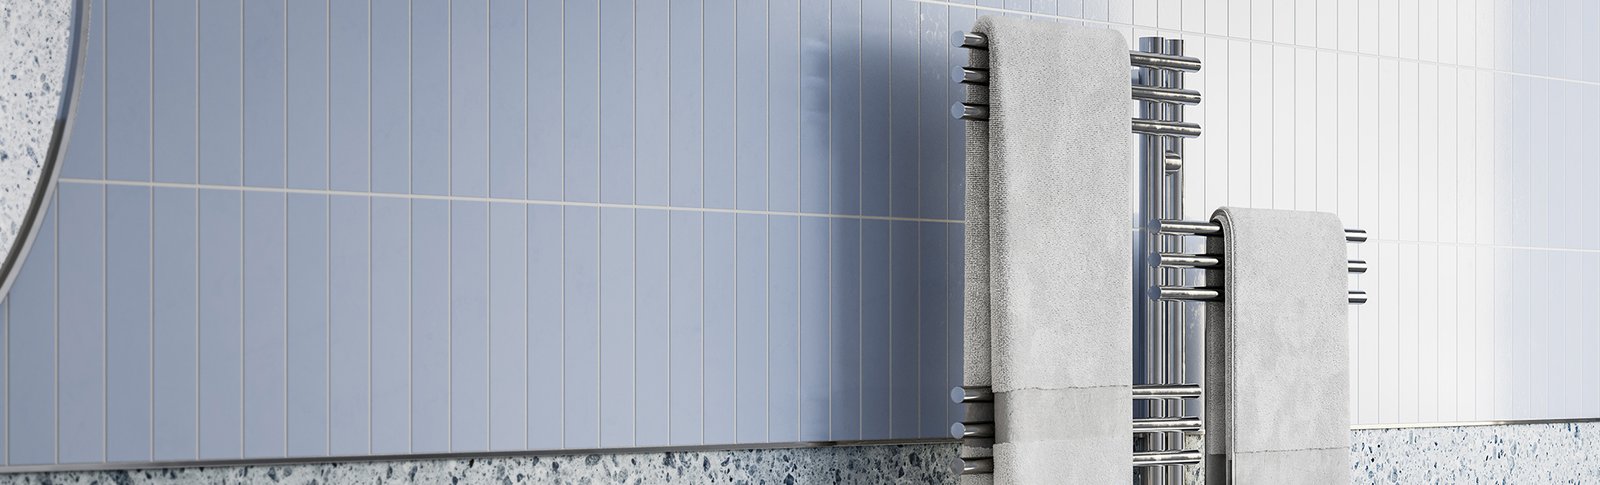 Loft Duo 12 Bar heated towel rail 1000mm wide on blue tiled wall